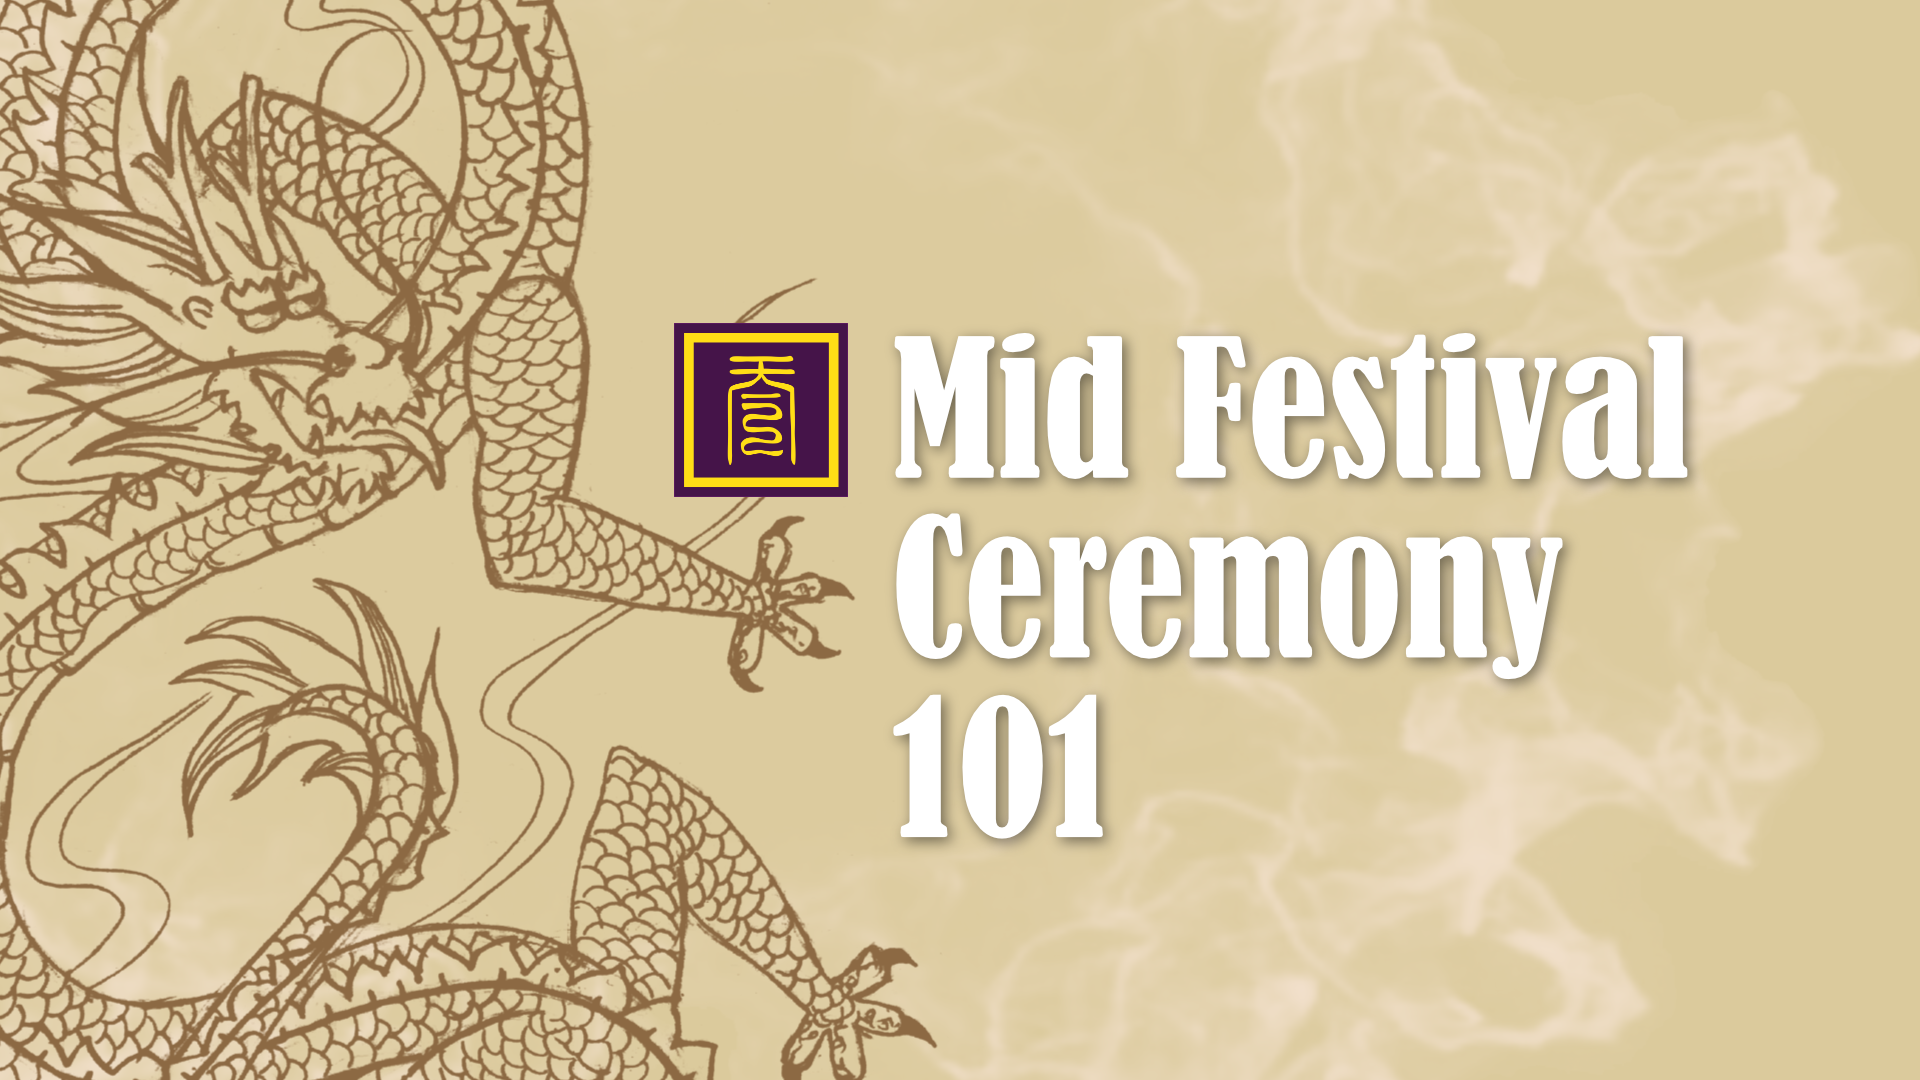 
          Taoism Mid-Festival Ceremony 101
        